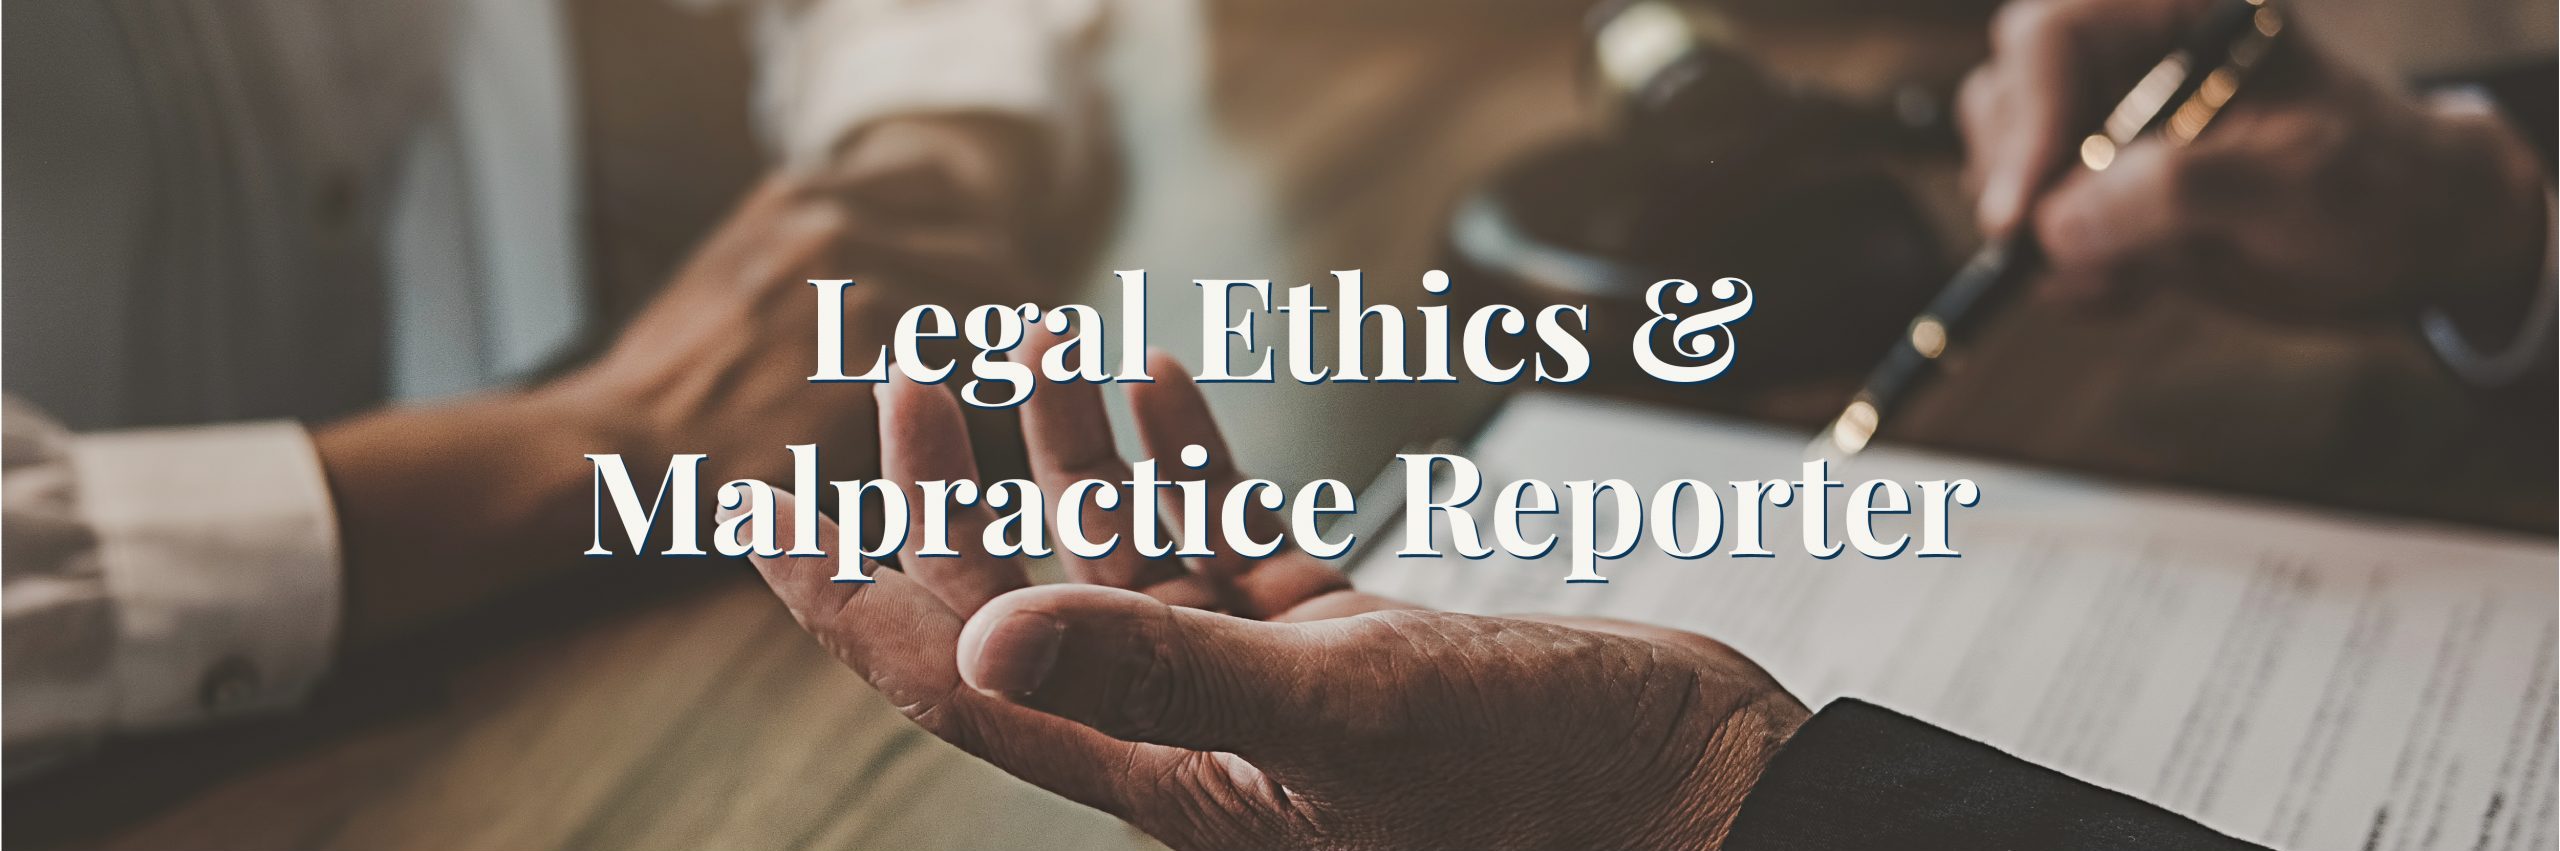 Legal Ethics & Malpractice Reporter